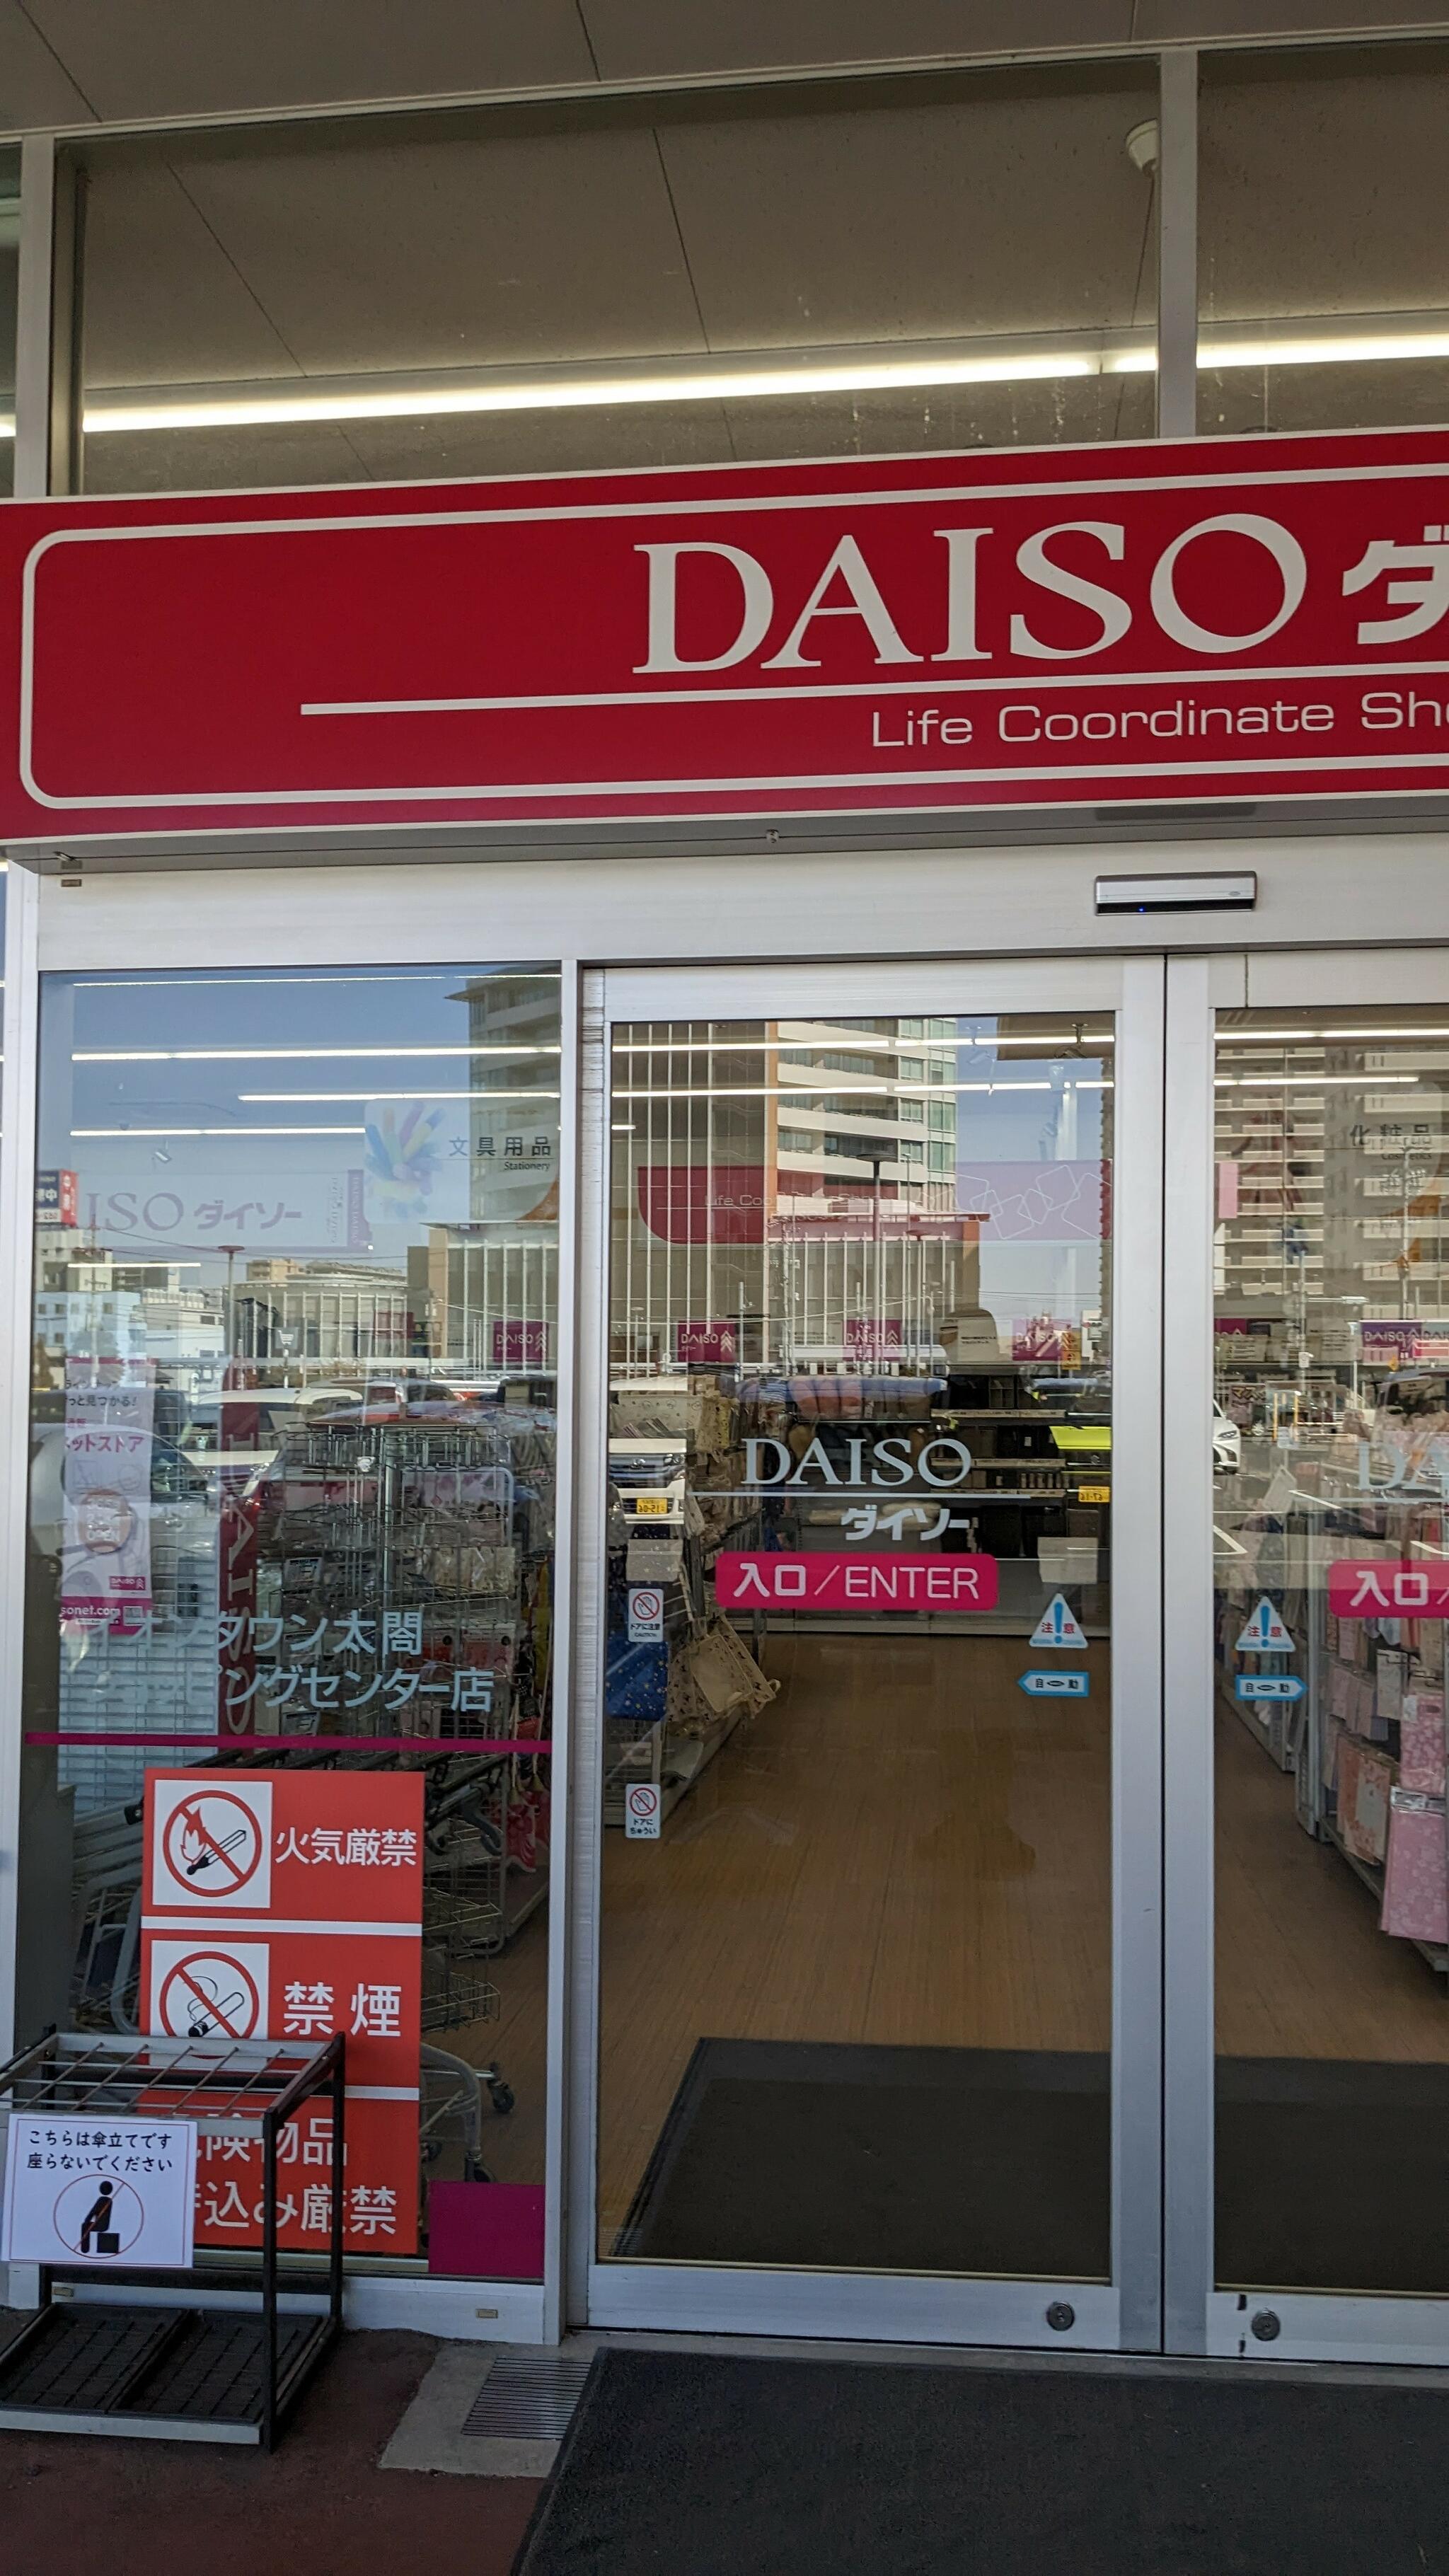 DAISO イオンタウン太閤ショッピングセンター店の代表写真1